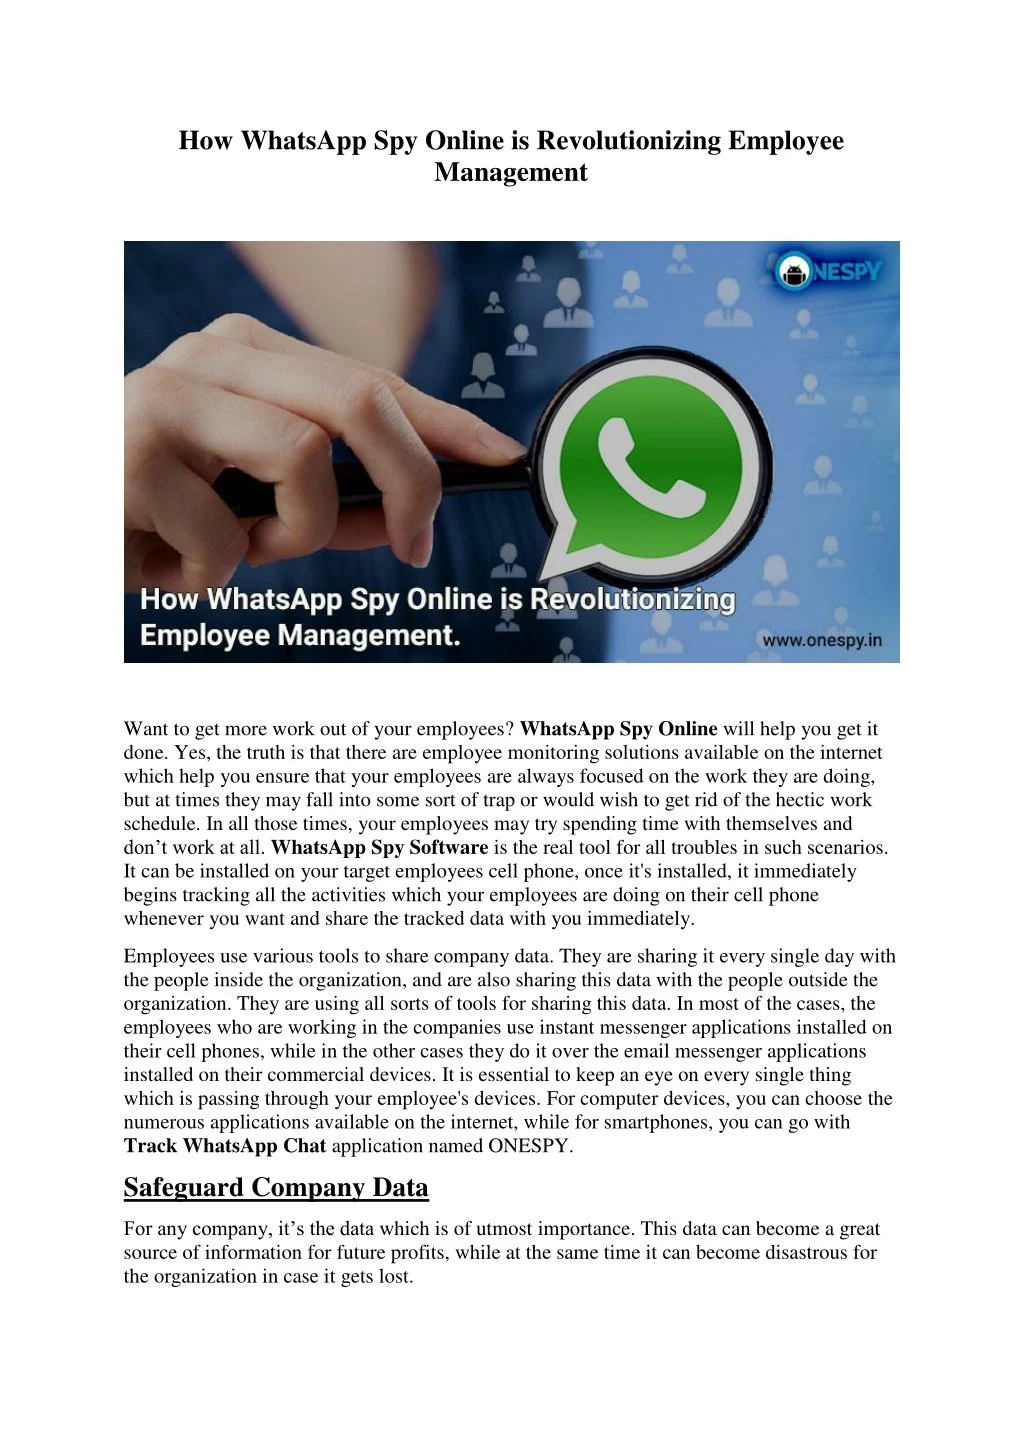 how whatsapp spy online is revolutionizing